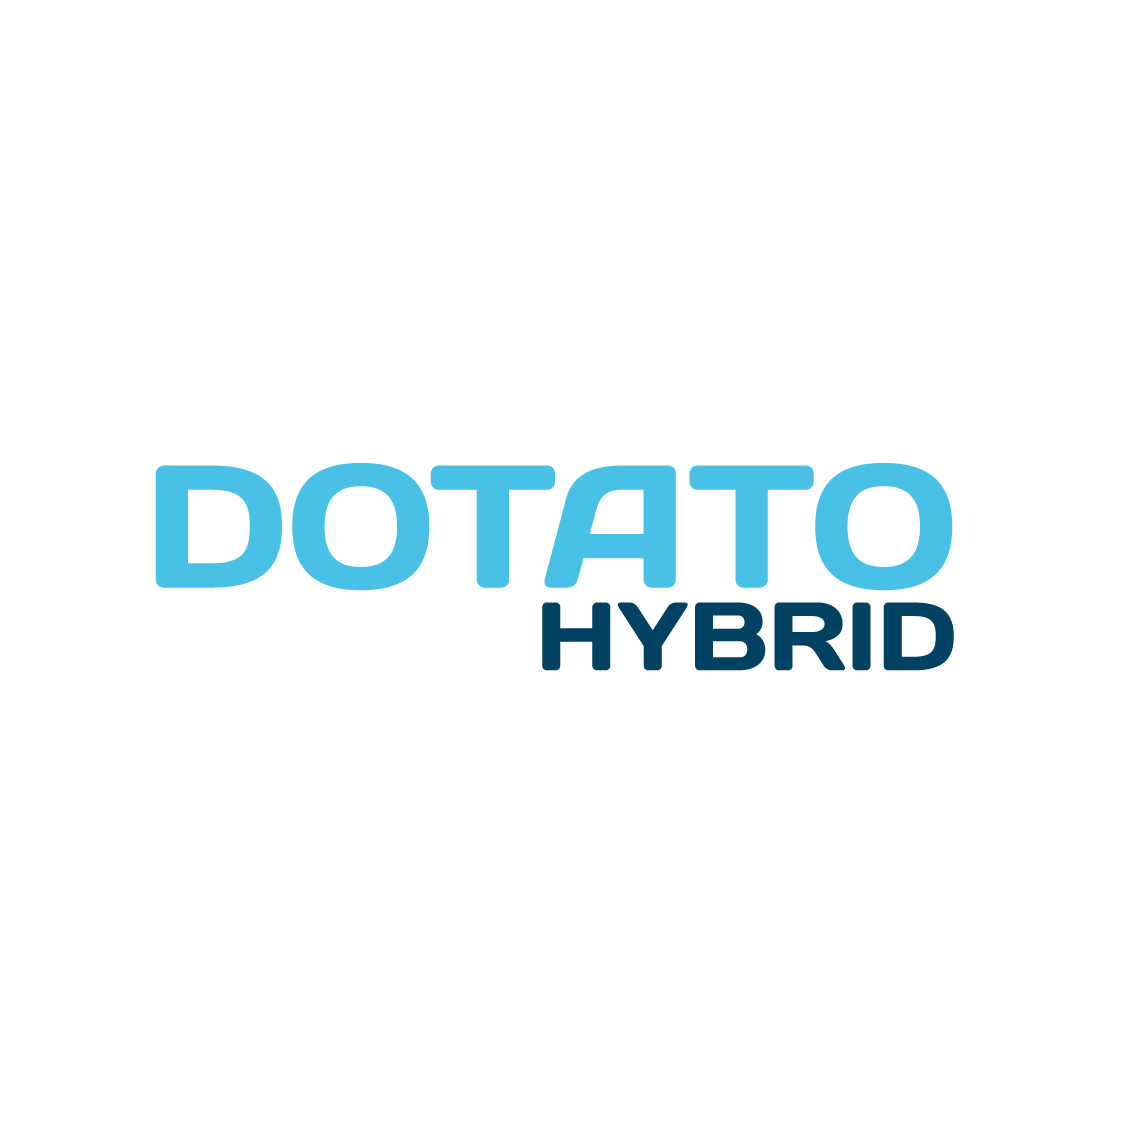 Dotato Hybrid - Travel Booking System